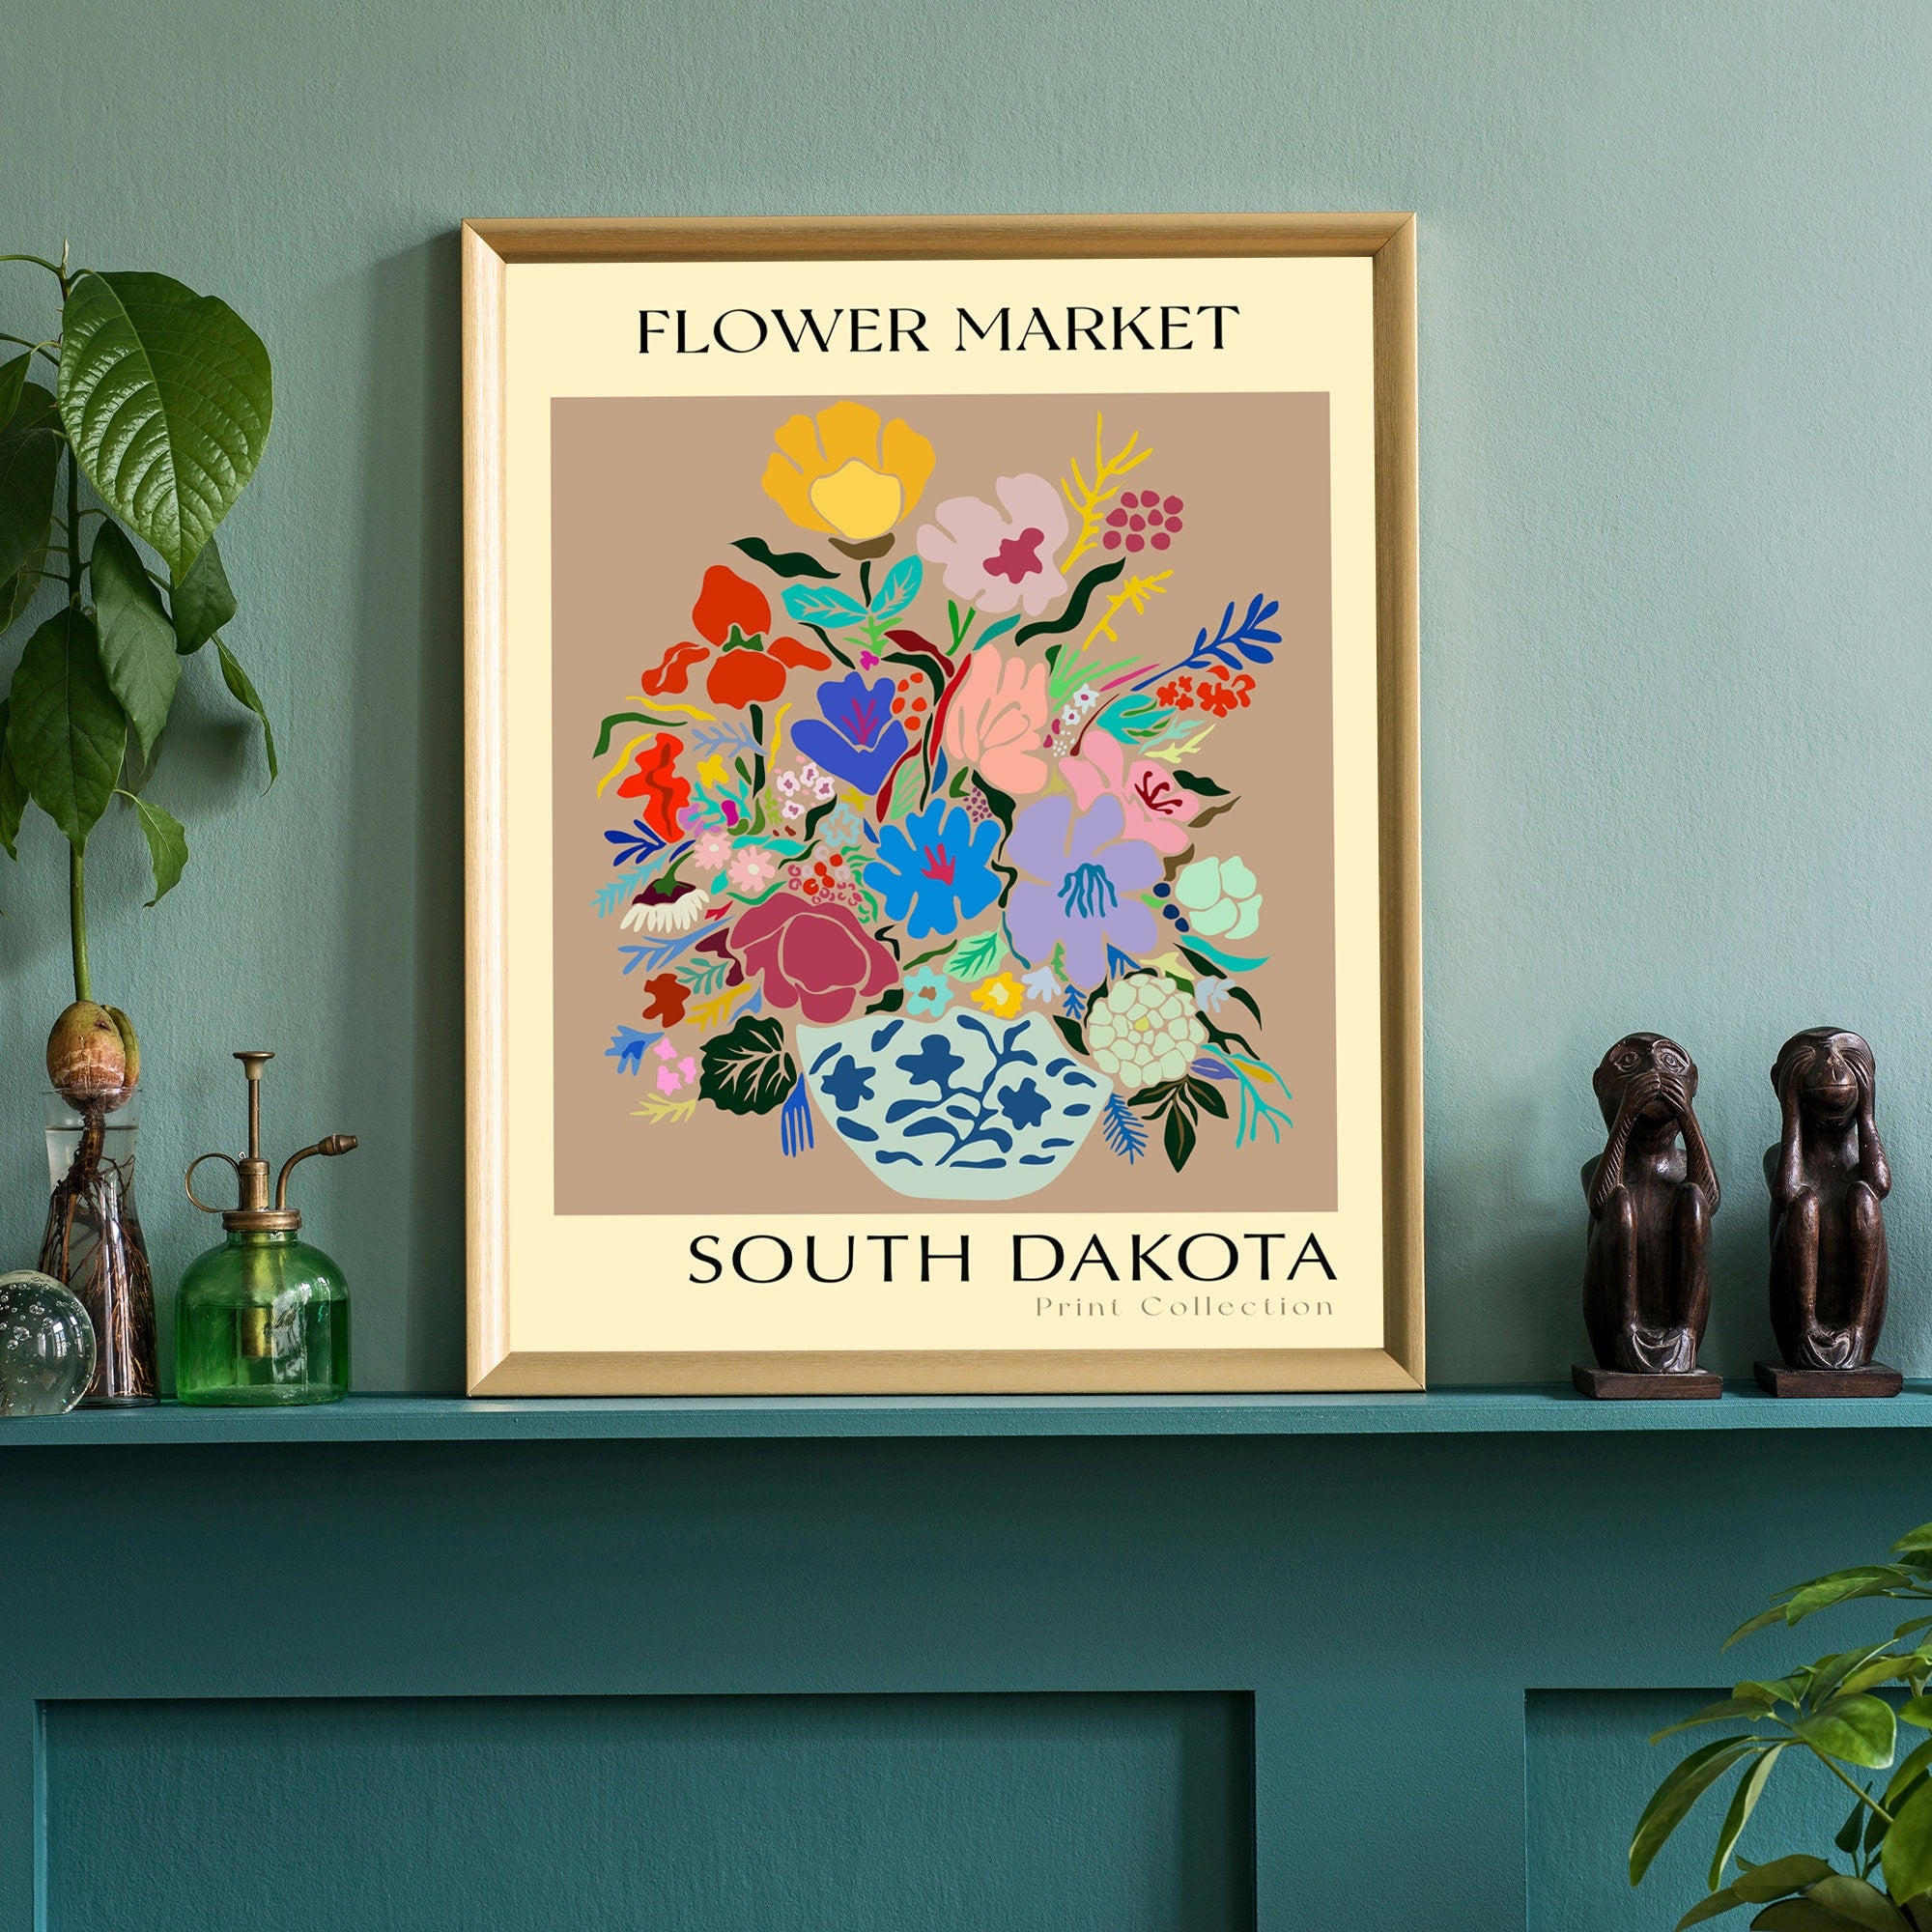 South Dakota State flower print, USA states poster, South Dakota flower market poster, Botanical poster, Nature poster floral artwork